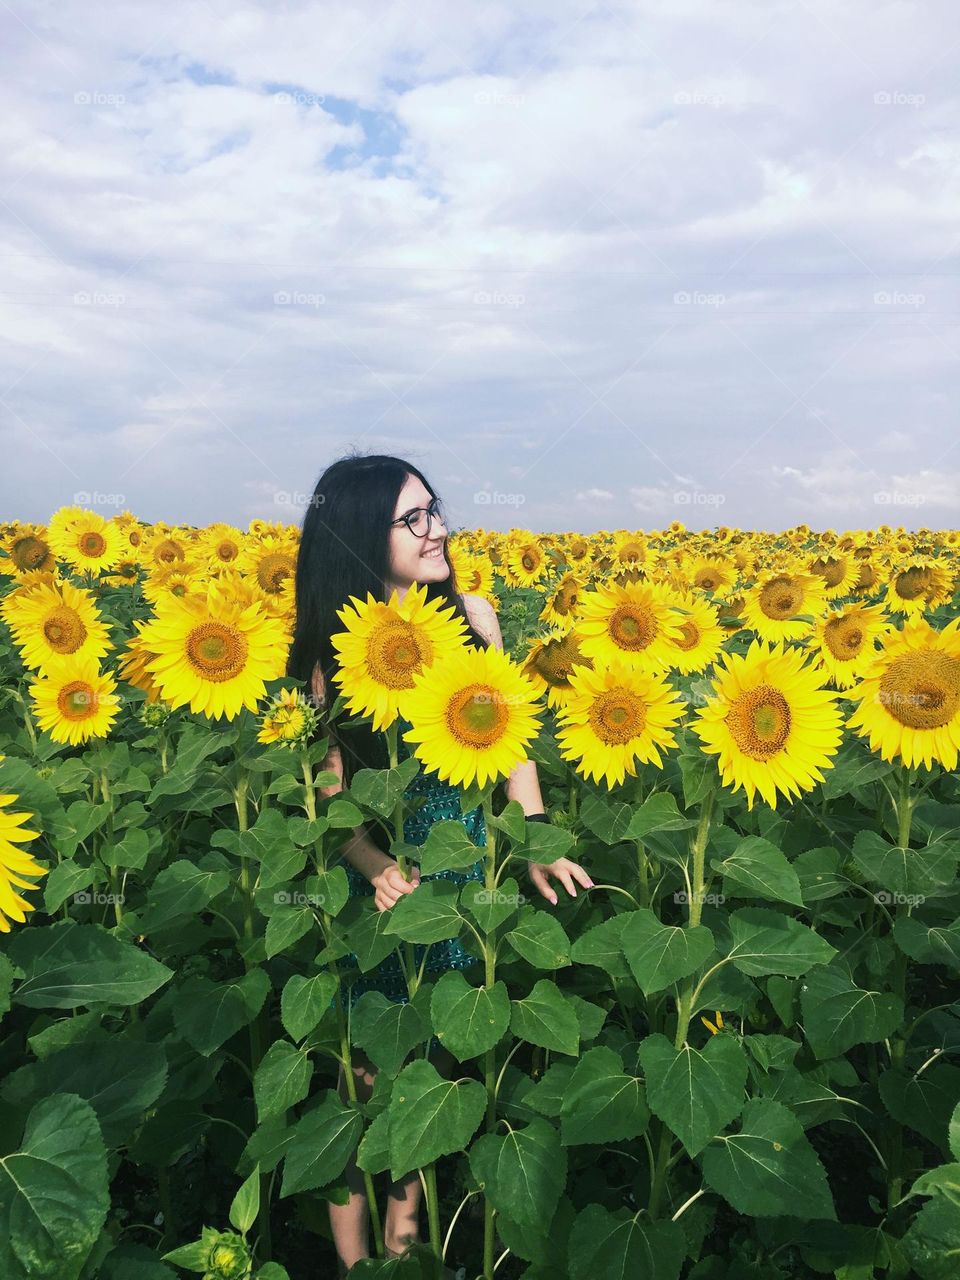 Summer photo. Sunflowers 